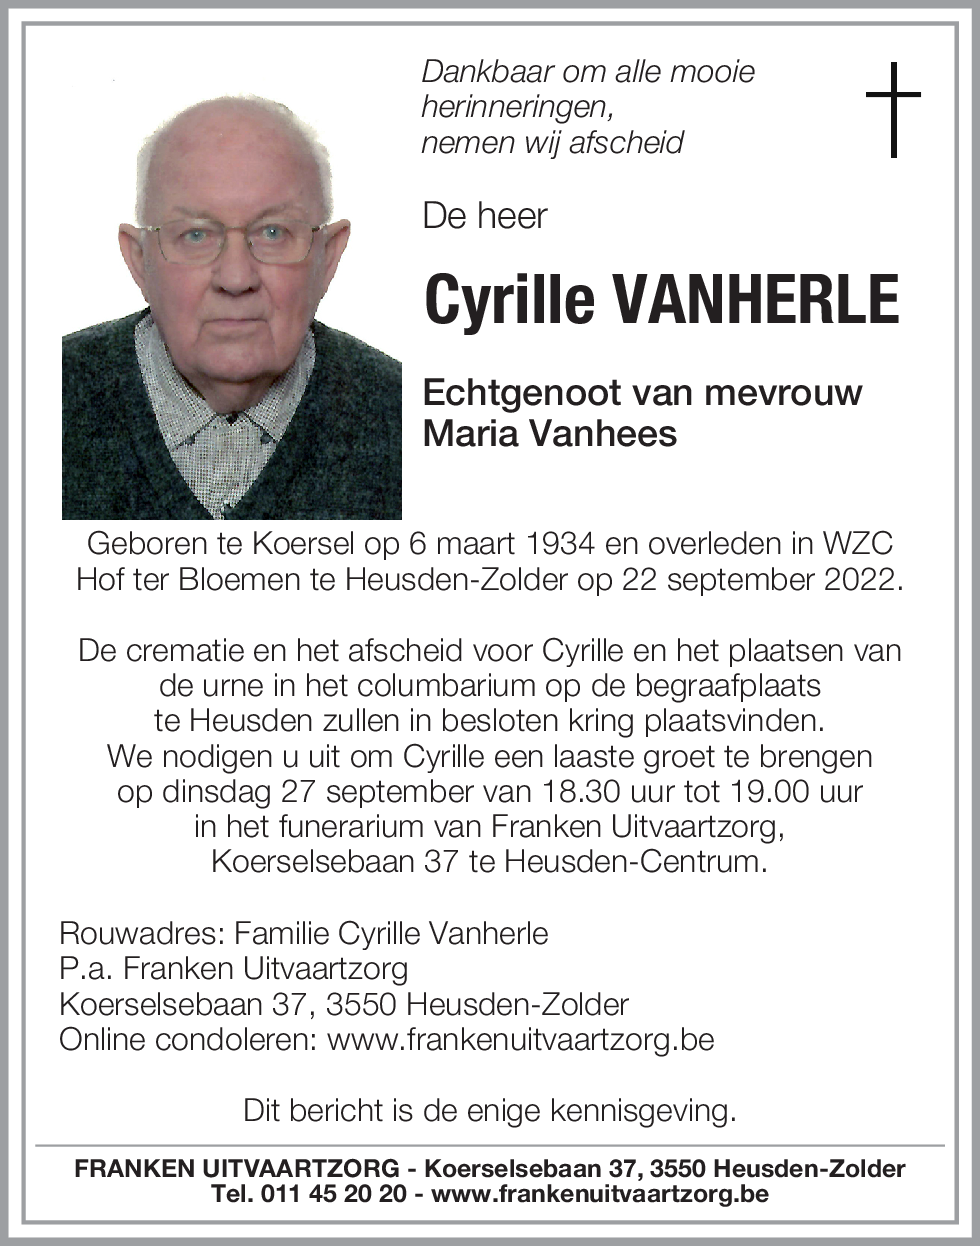 Cyrille VANHERLE